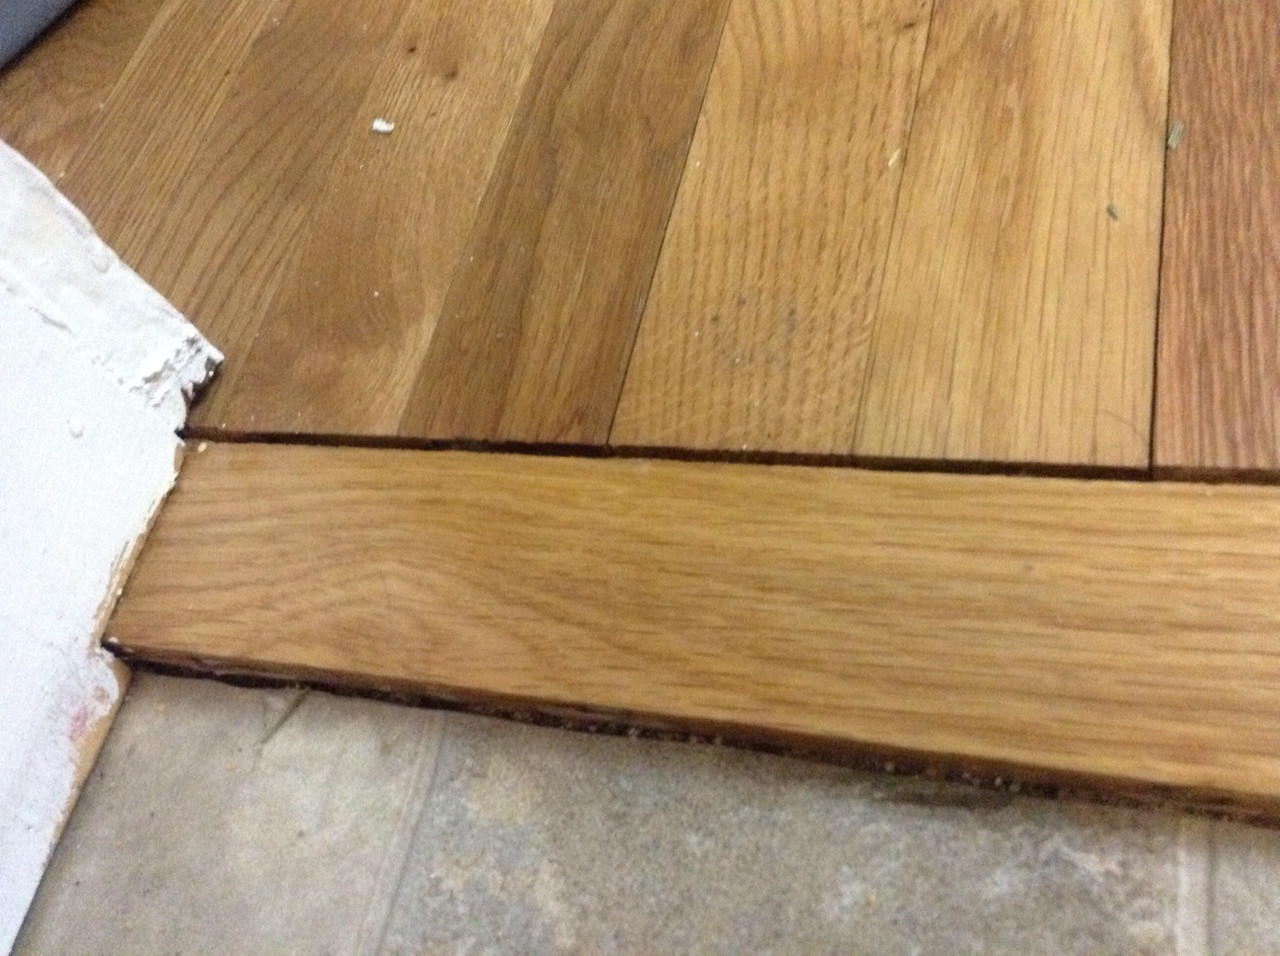 hardwood flooring estimate software of wood floor techniques 101 regarding gap shrinkage cork